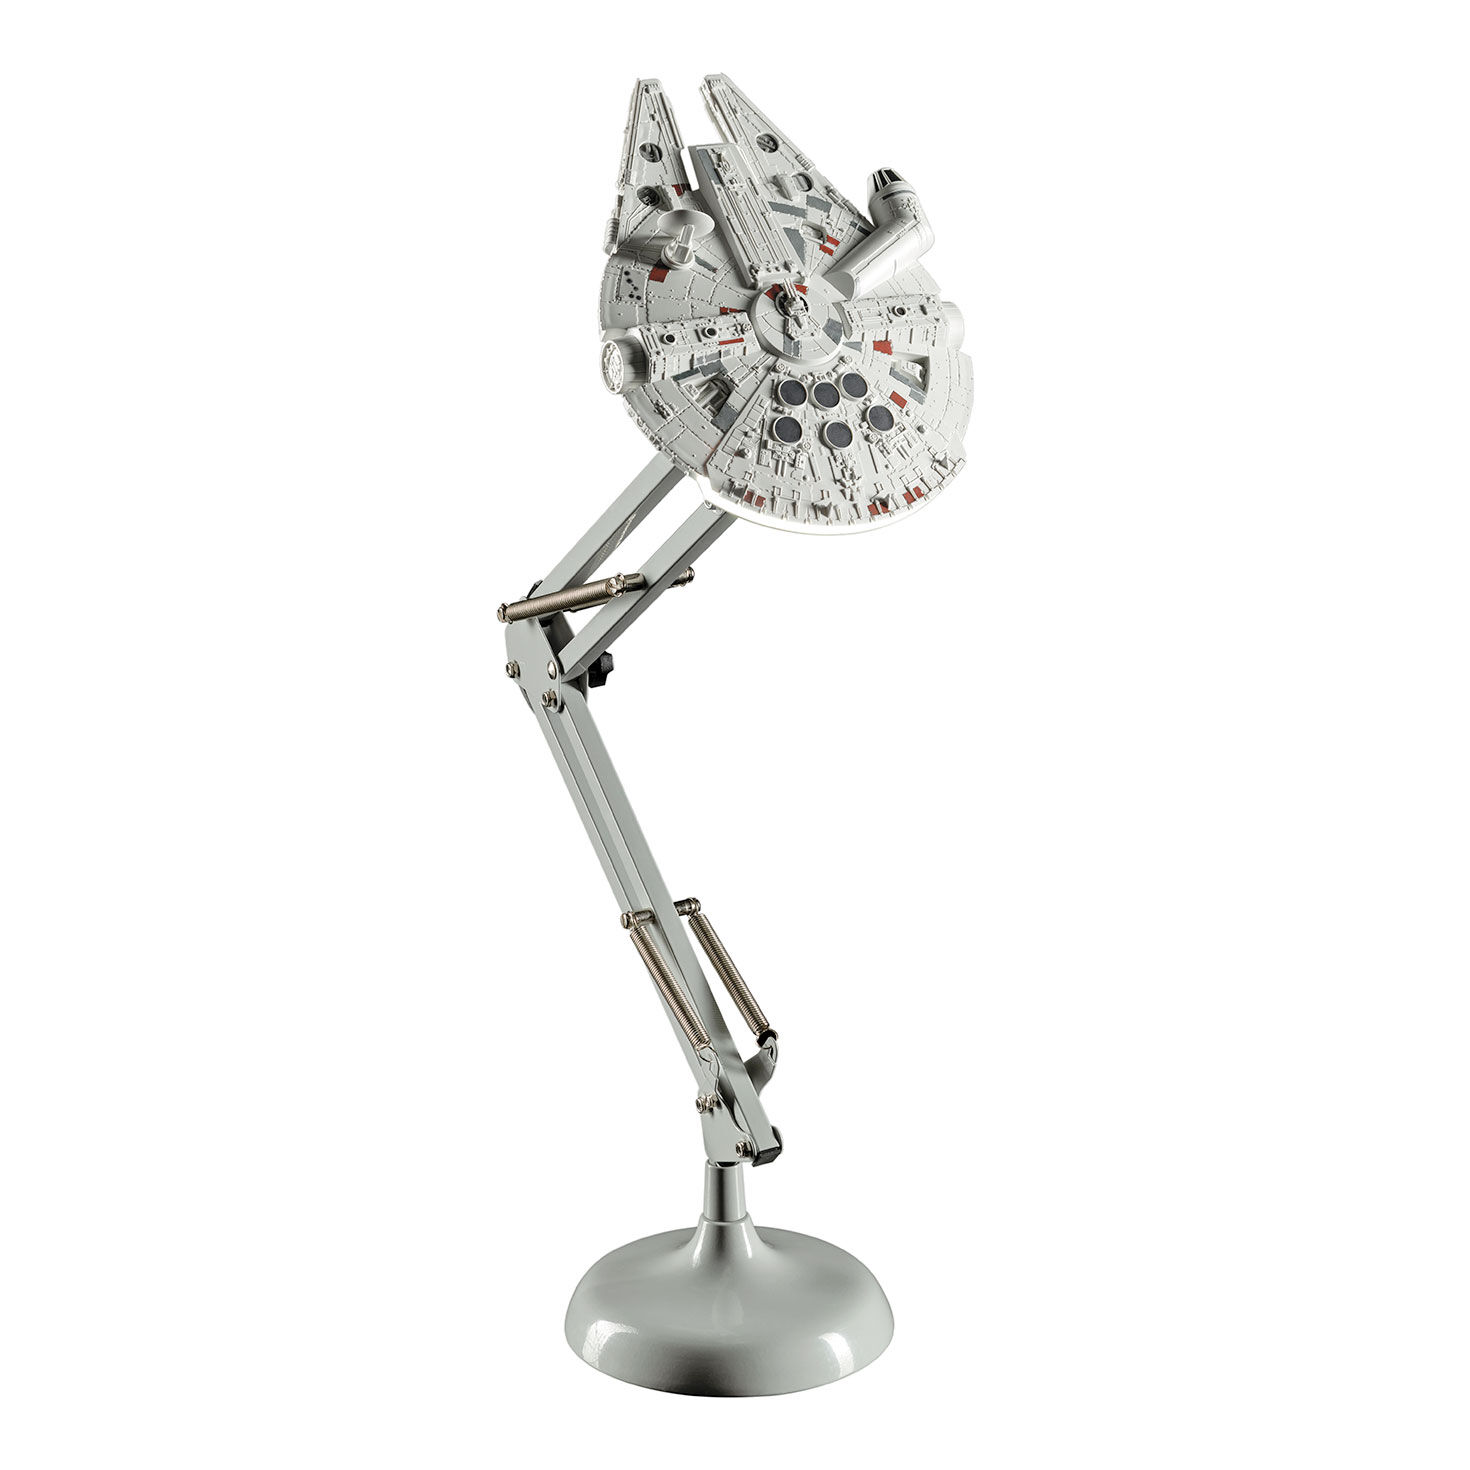 Star Wars Millennium Falcon Posable Desk Lamp for only USD 69.99 | Hallmark